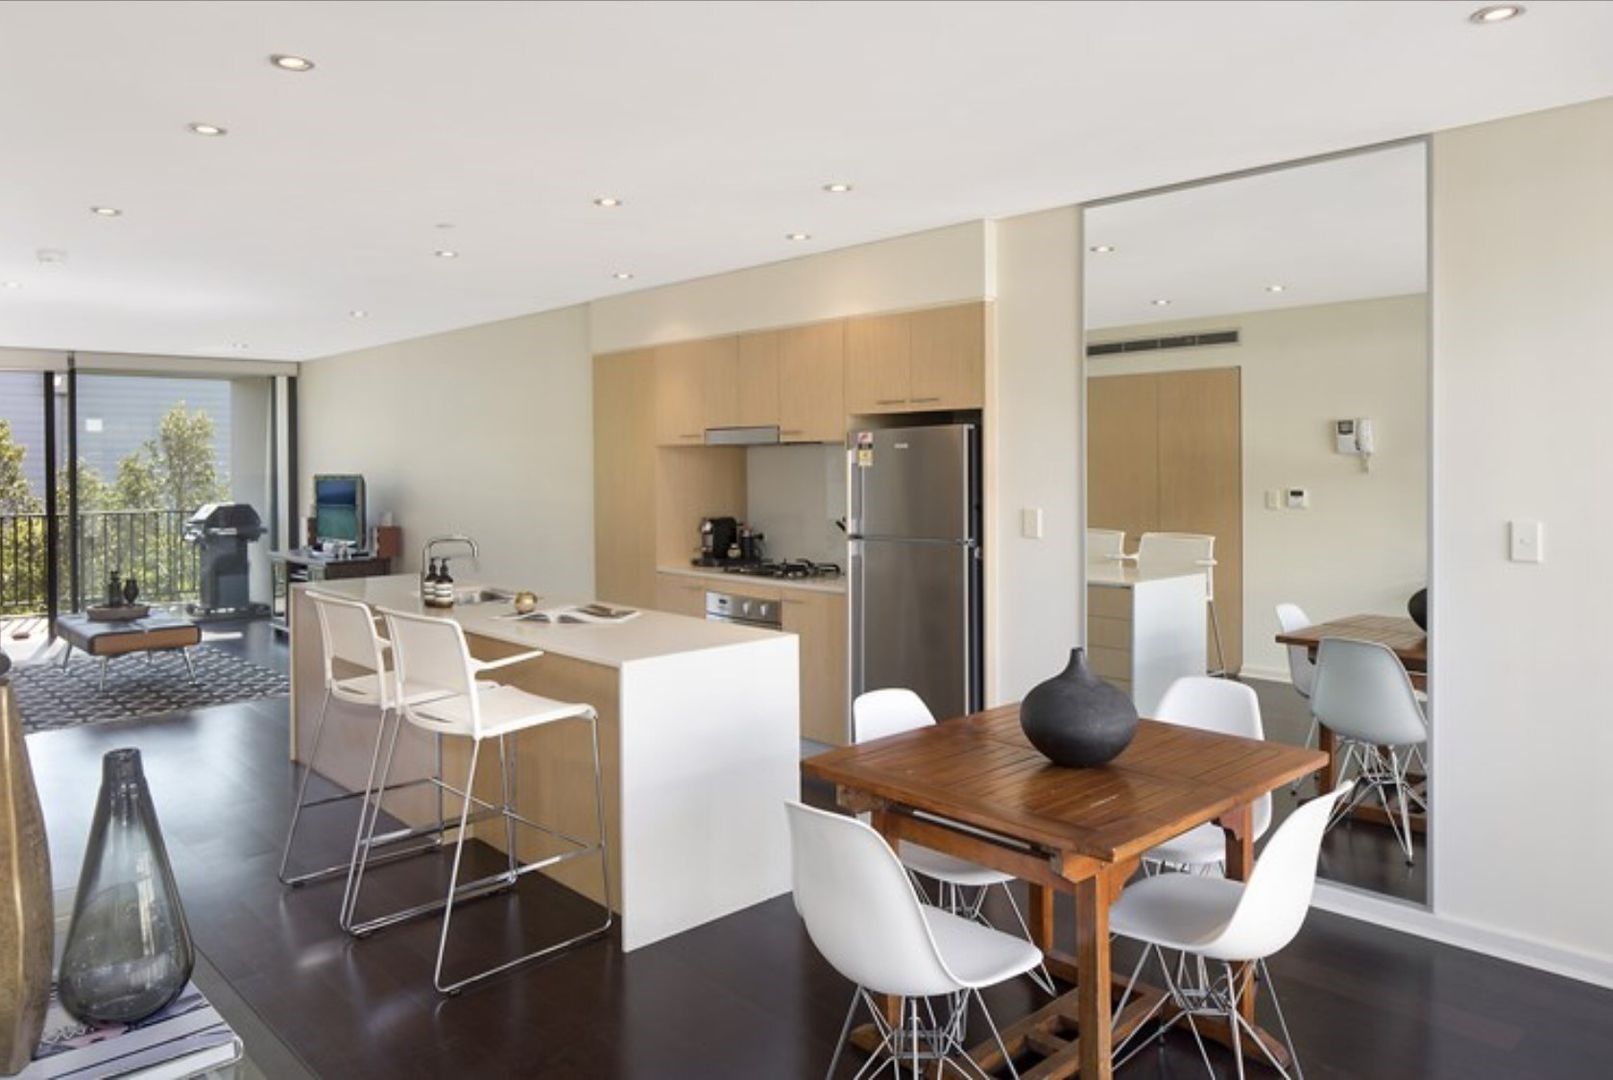 2 bedrooms Apartment / Unit / Flat in 1301/88 King Street RANDWICK NSW, 2031